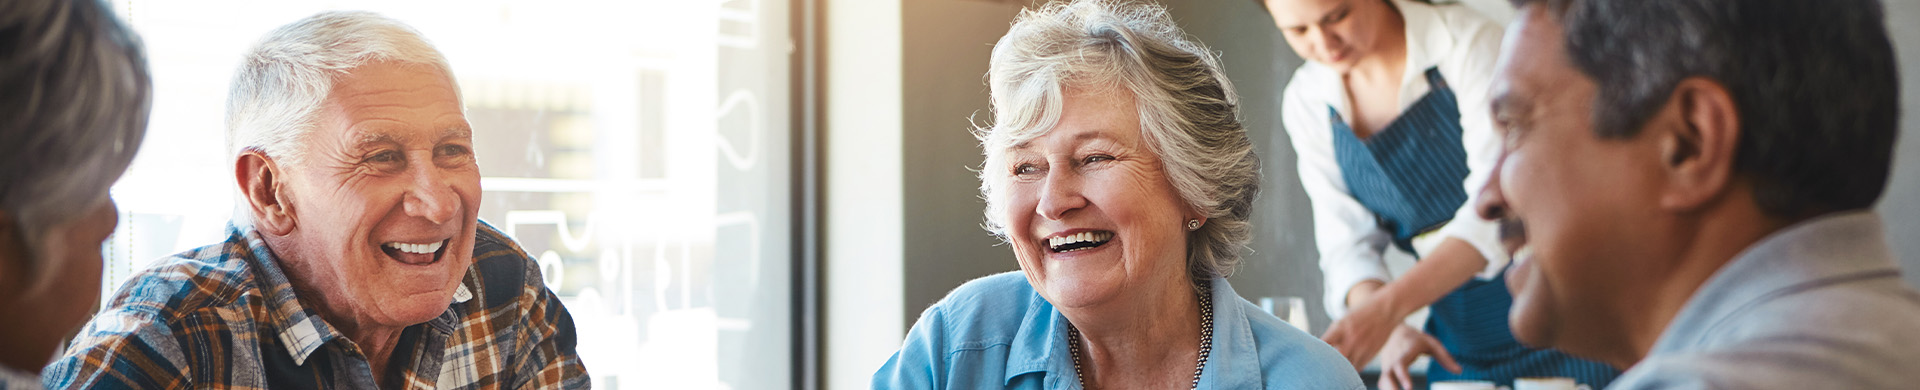 seniors laughing at a retirement community